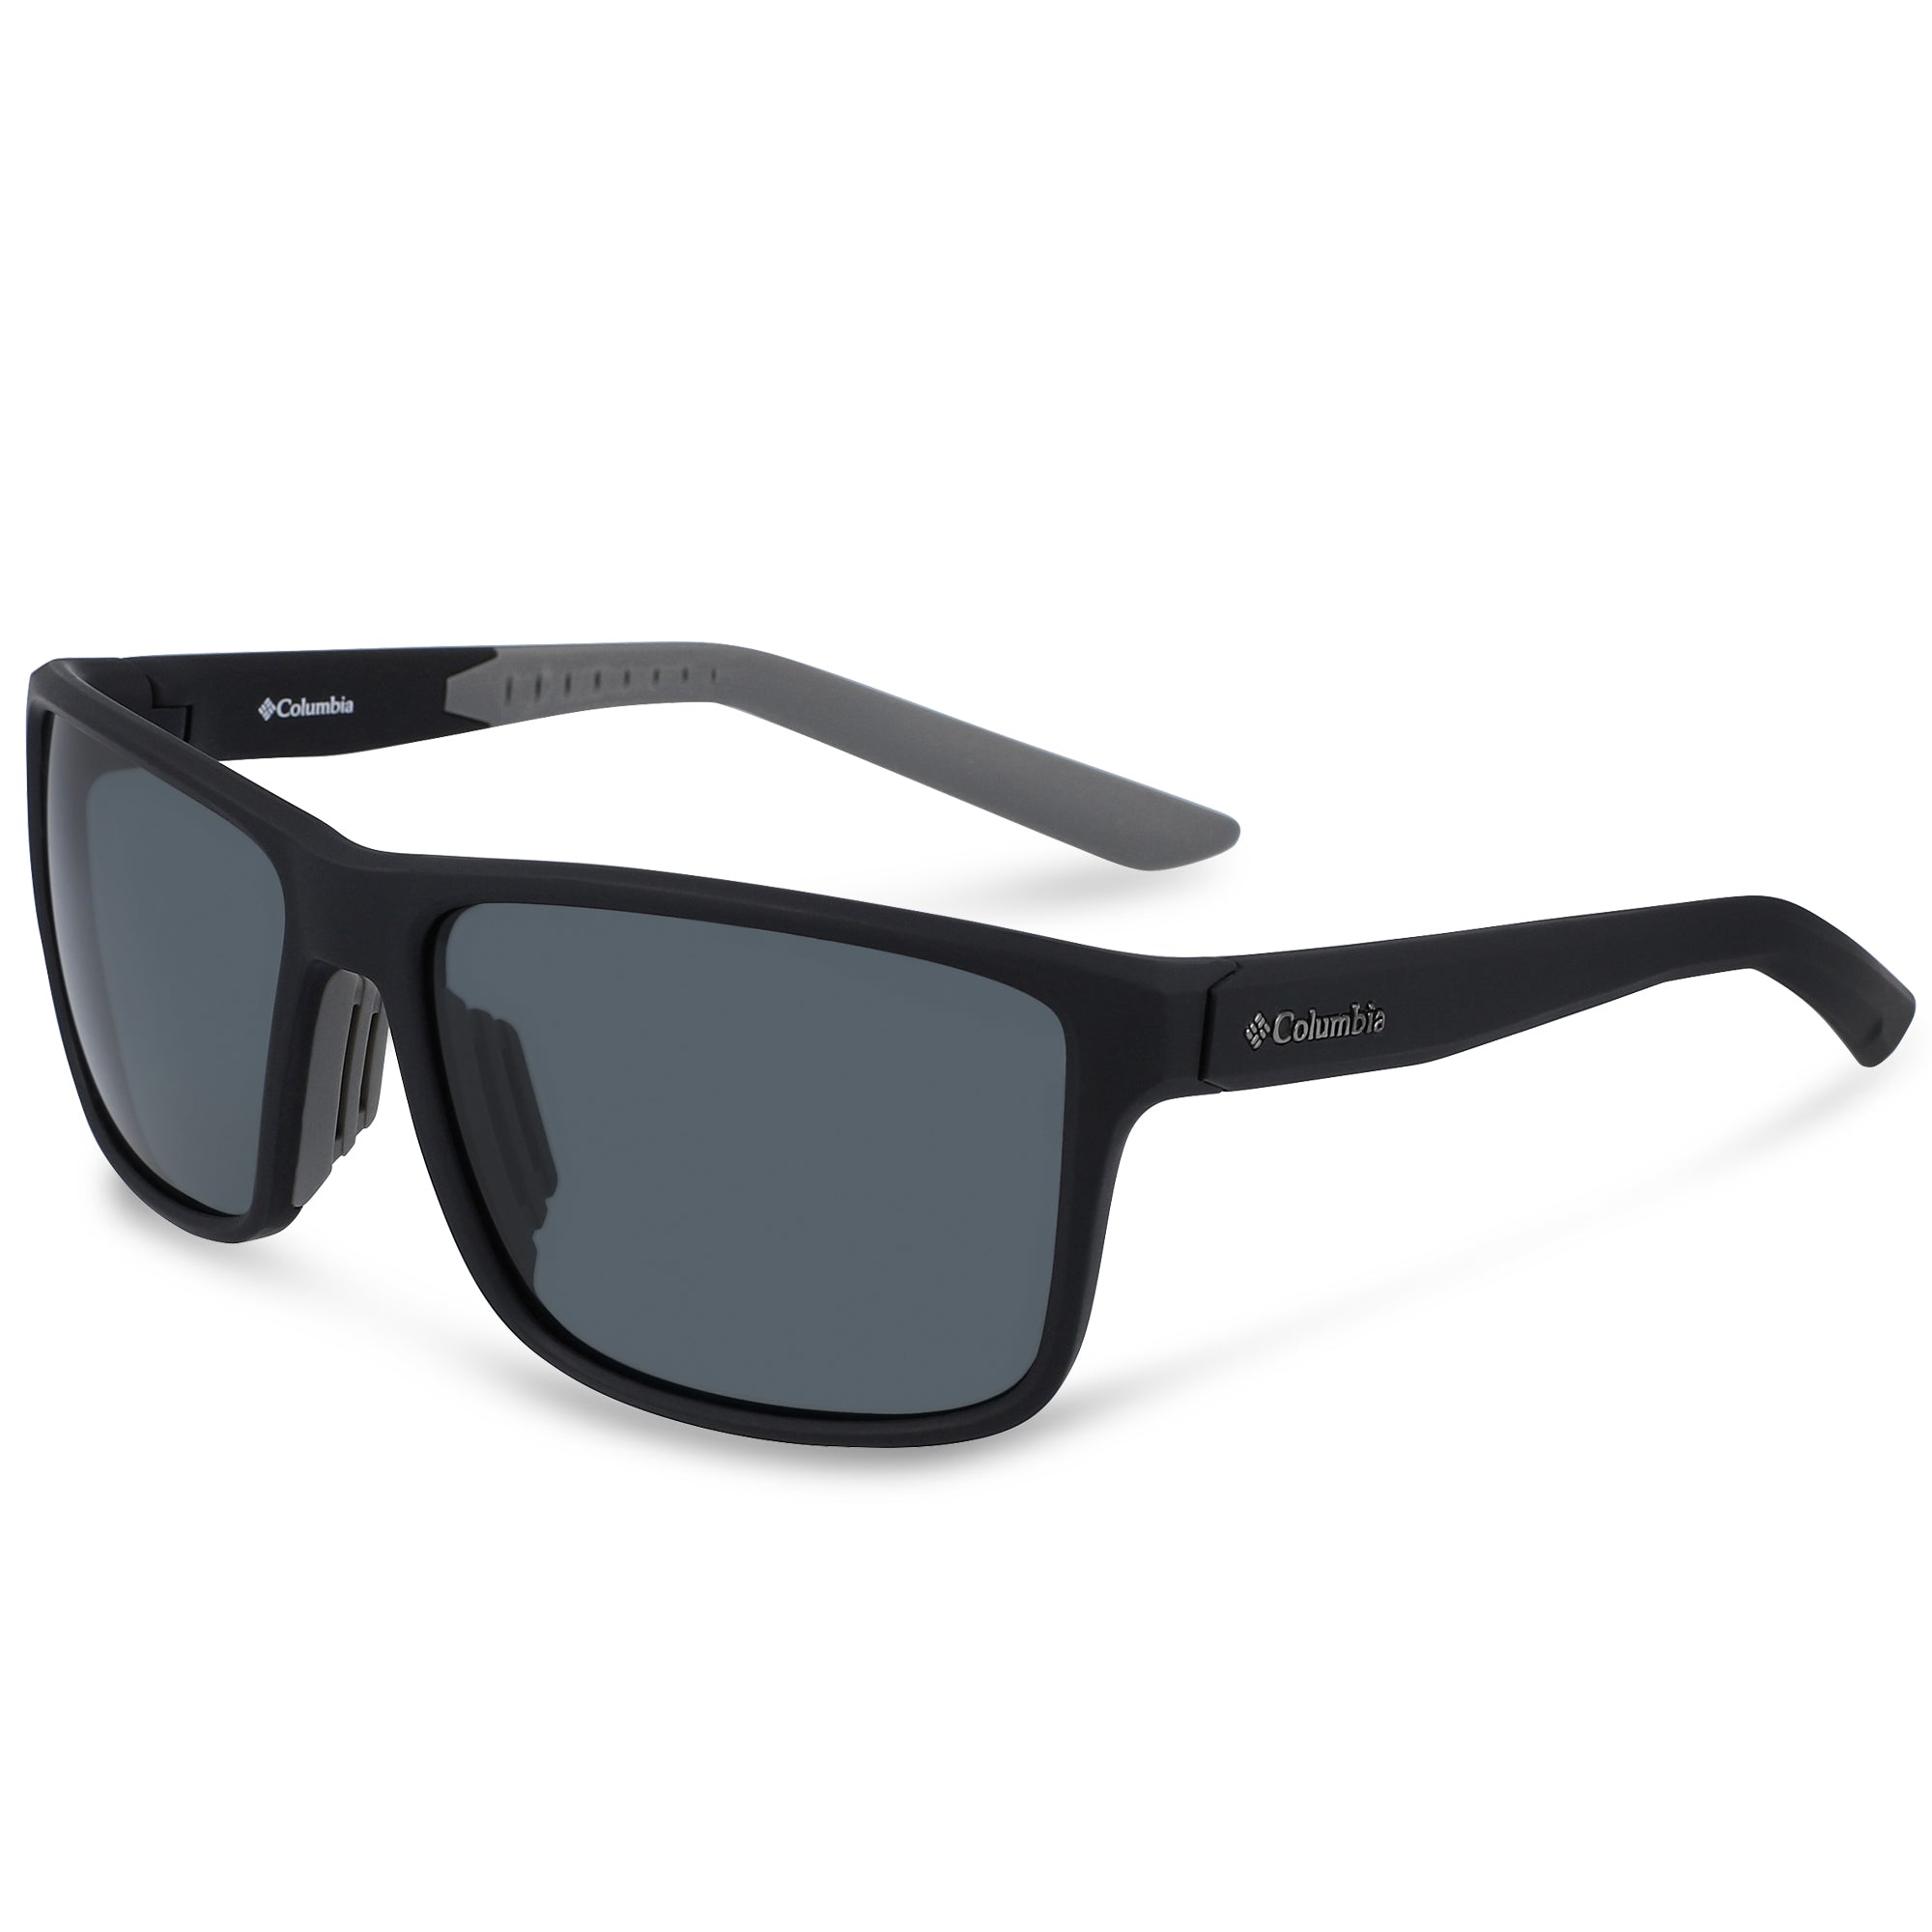 Columbia Men's Peak Racer Sunglasses, Black/Smoke Polarized, 70 mm